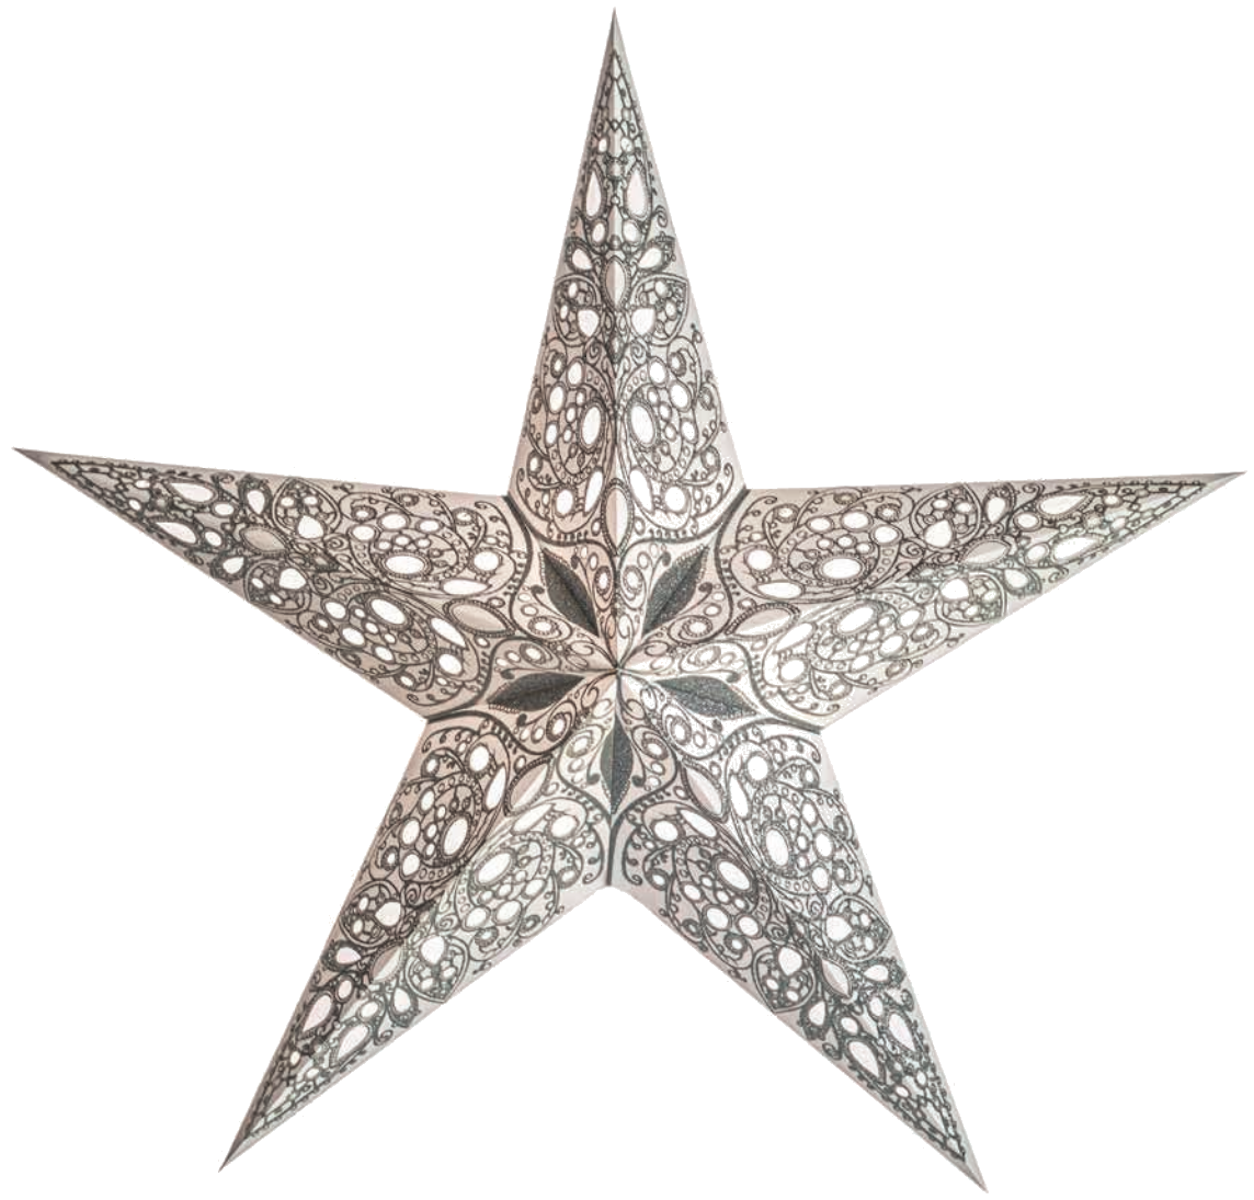 Bild für Kategorie starlightz raja